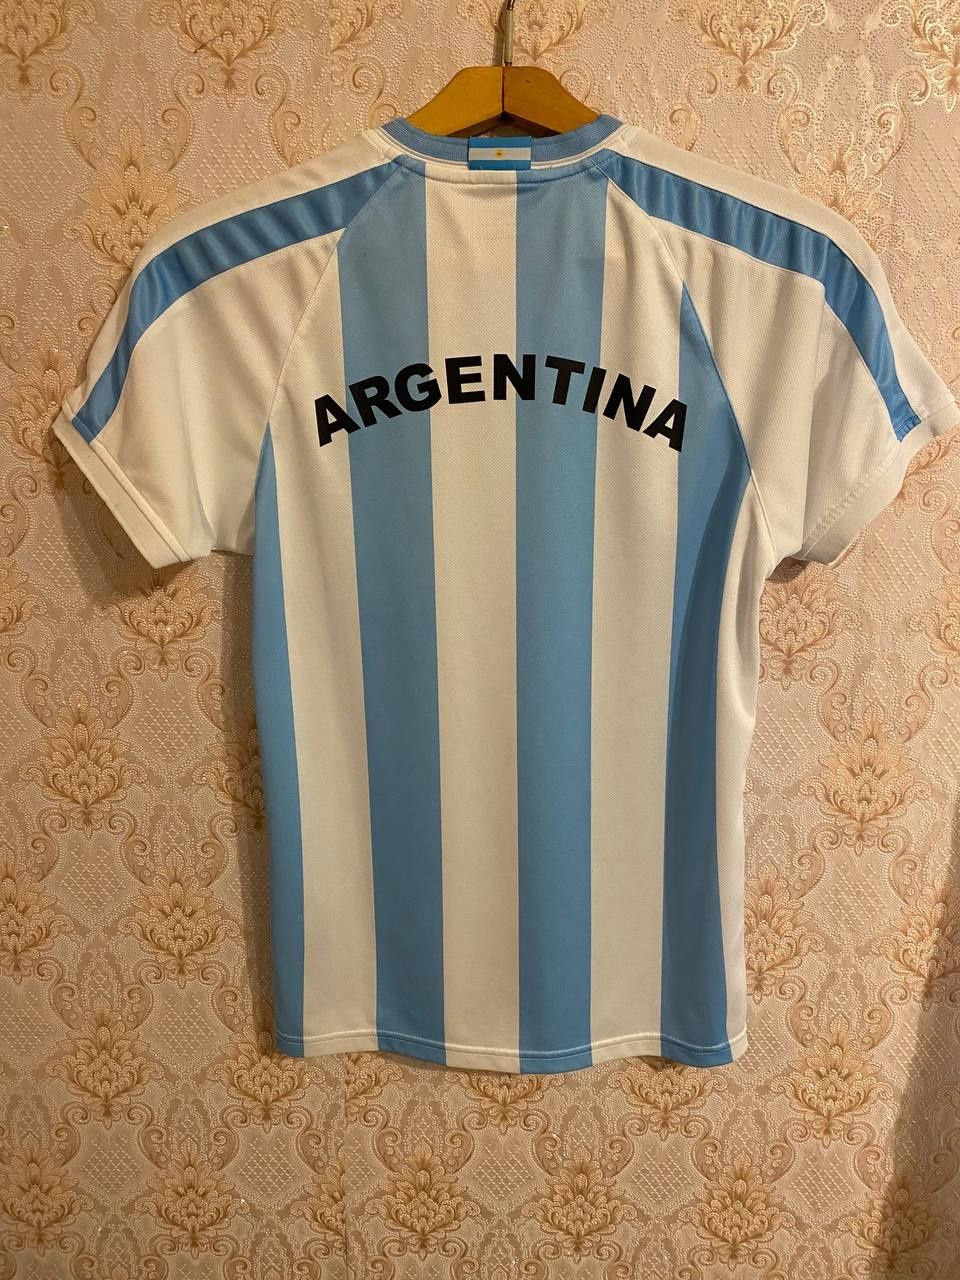 Продам Фтболку ARGENTINA